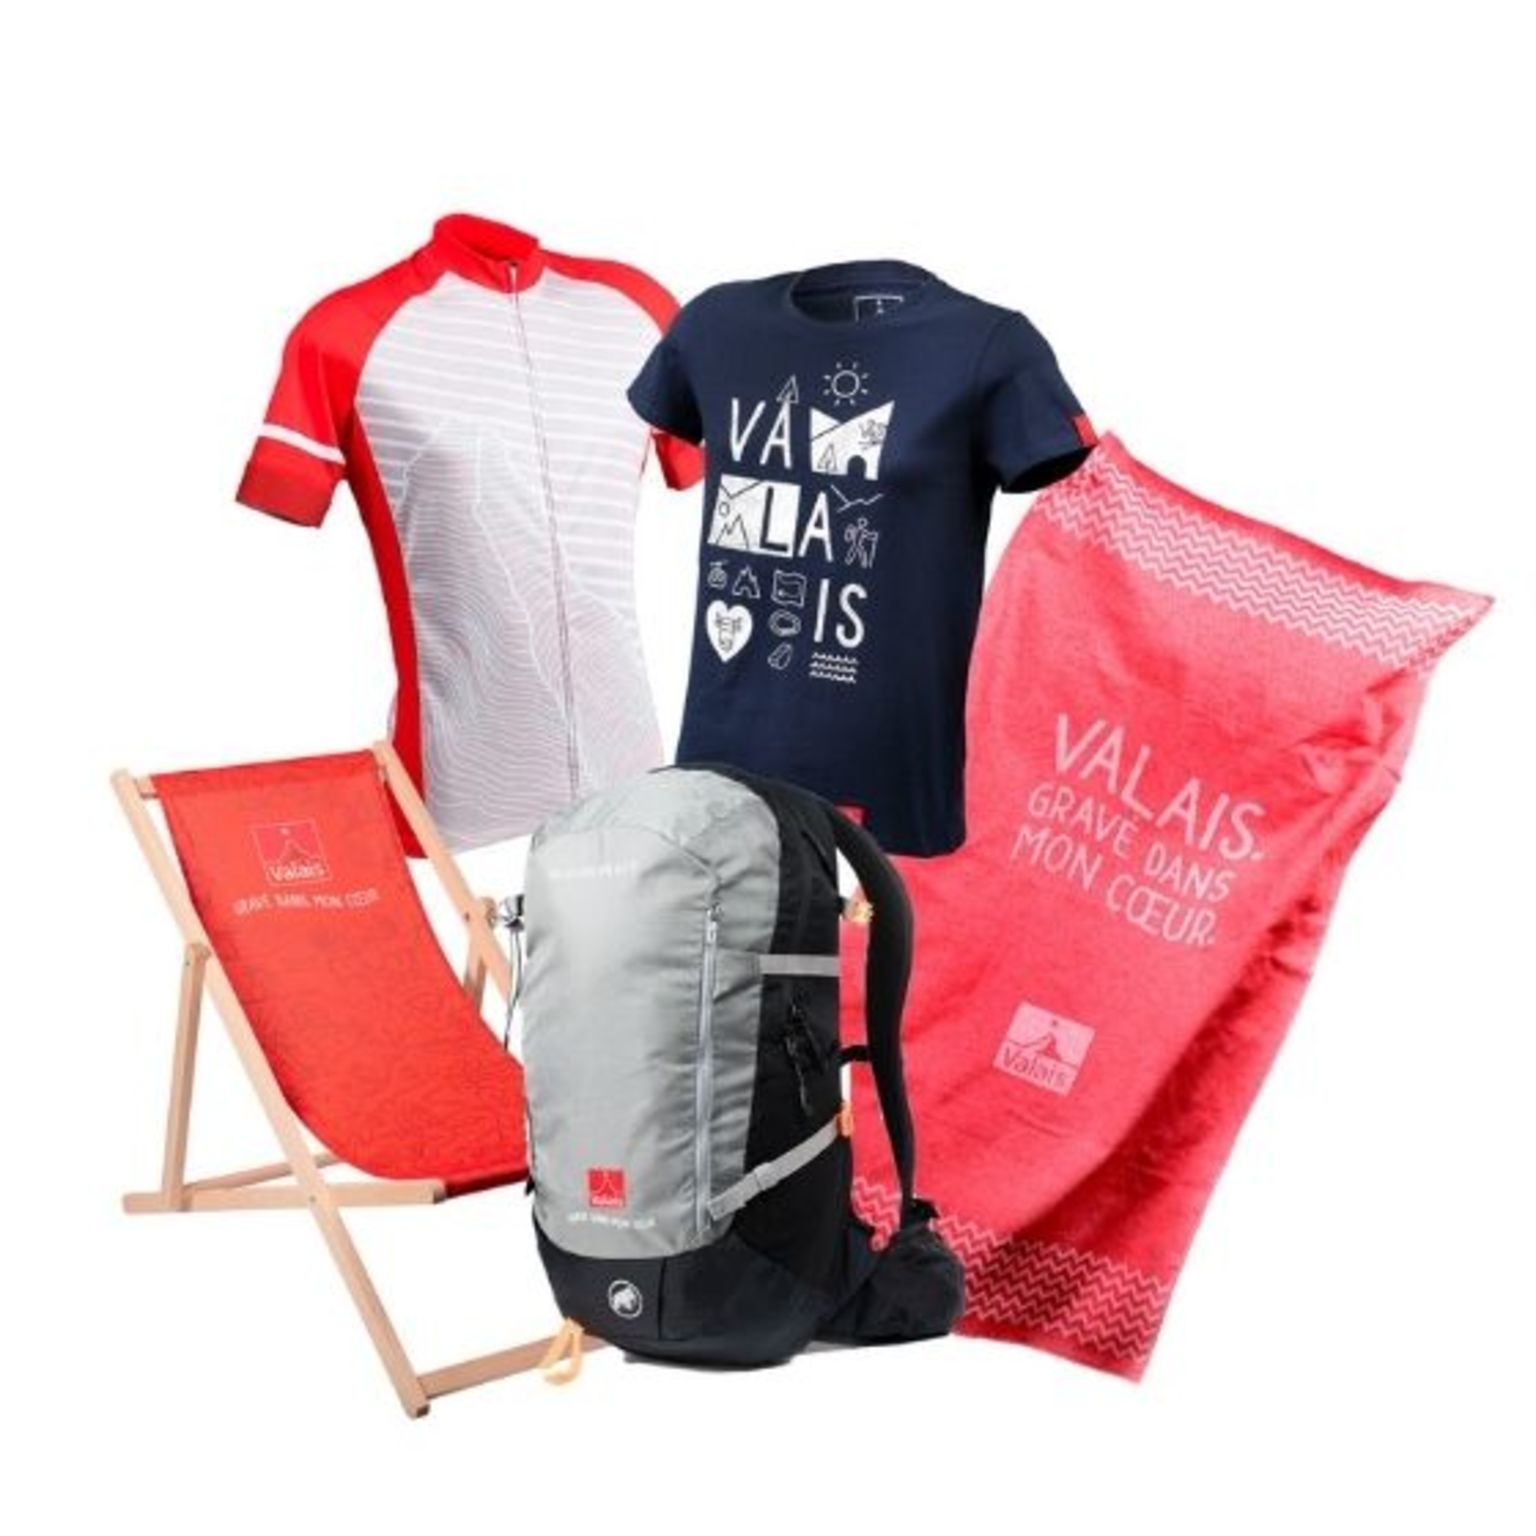 Lounge chair, t-shirt, backpack, store Valais, Switzerland